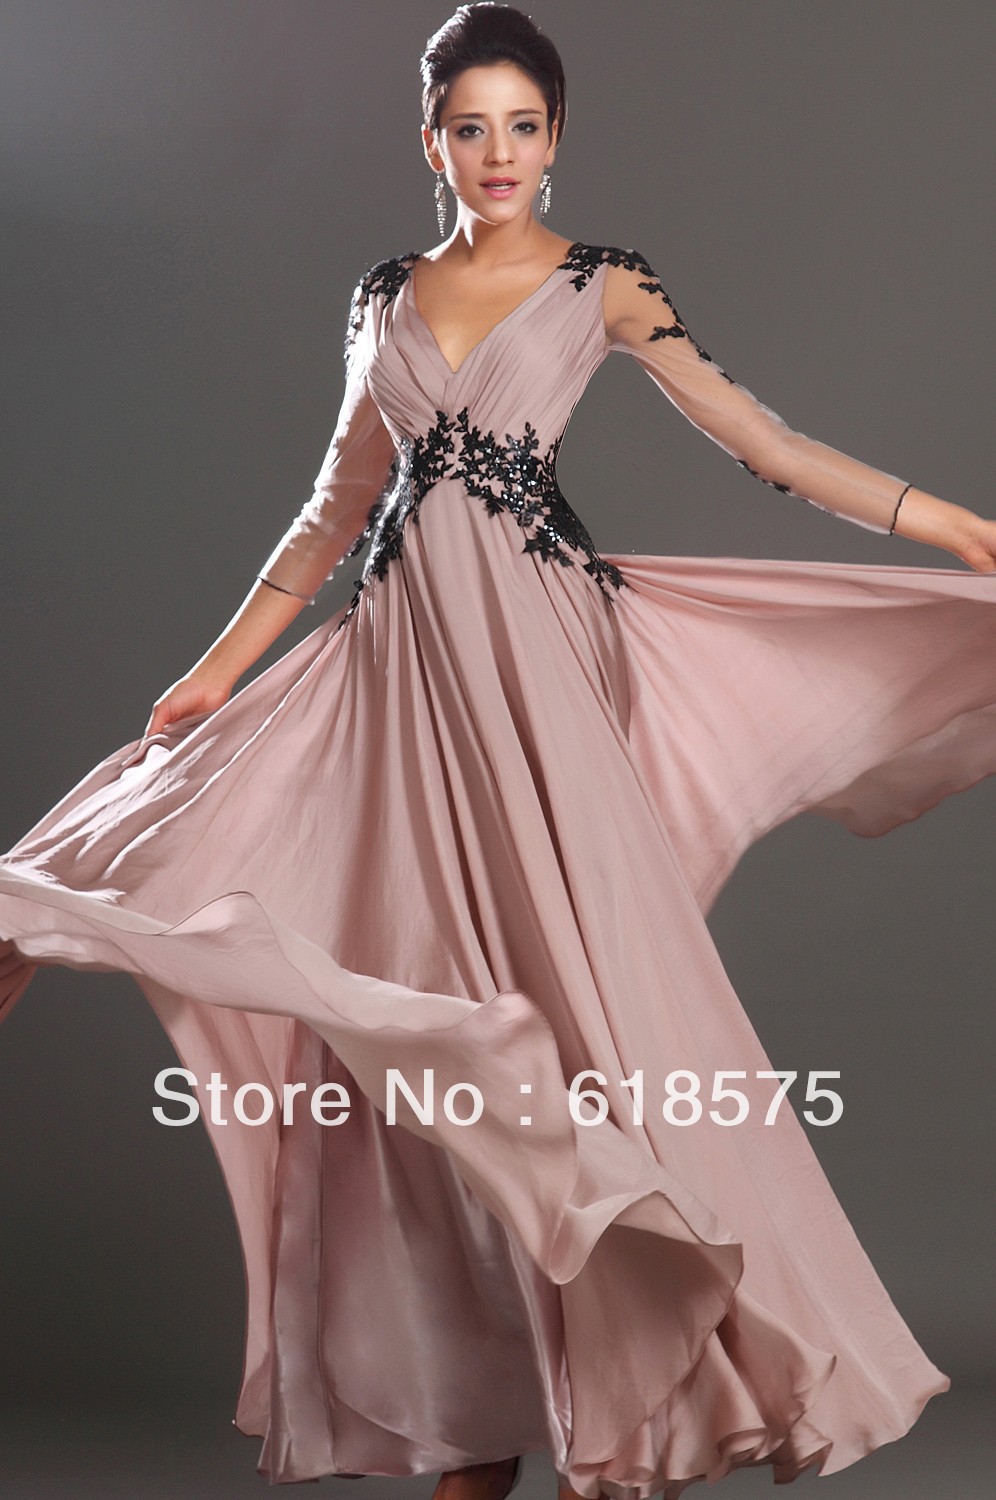 Online Get Cheap Indie Dress -Aliexpress.com - Alibaba Group